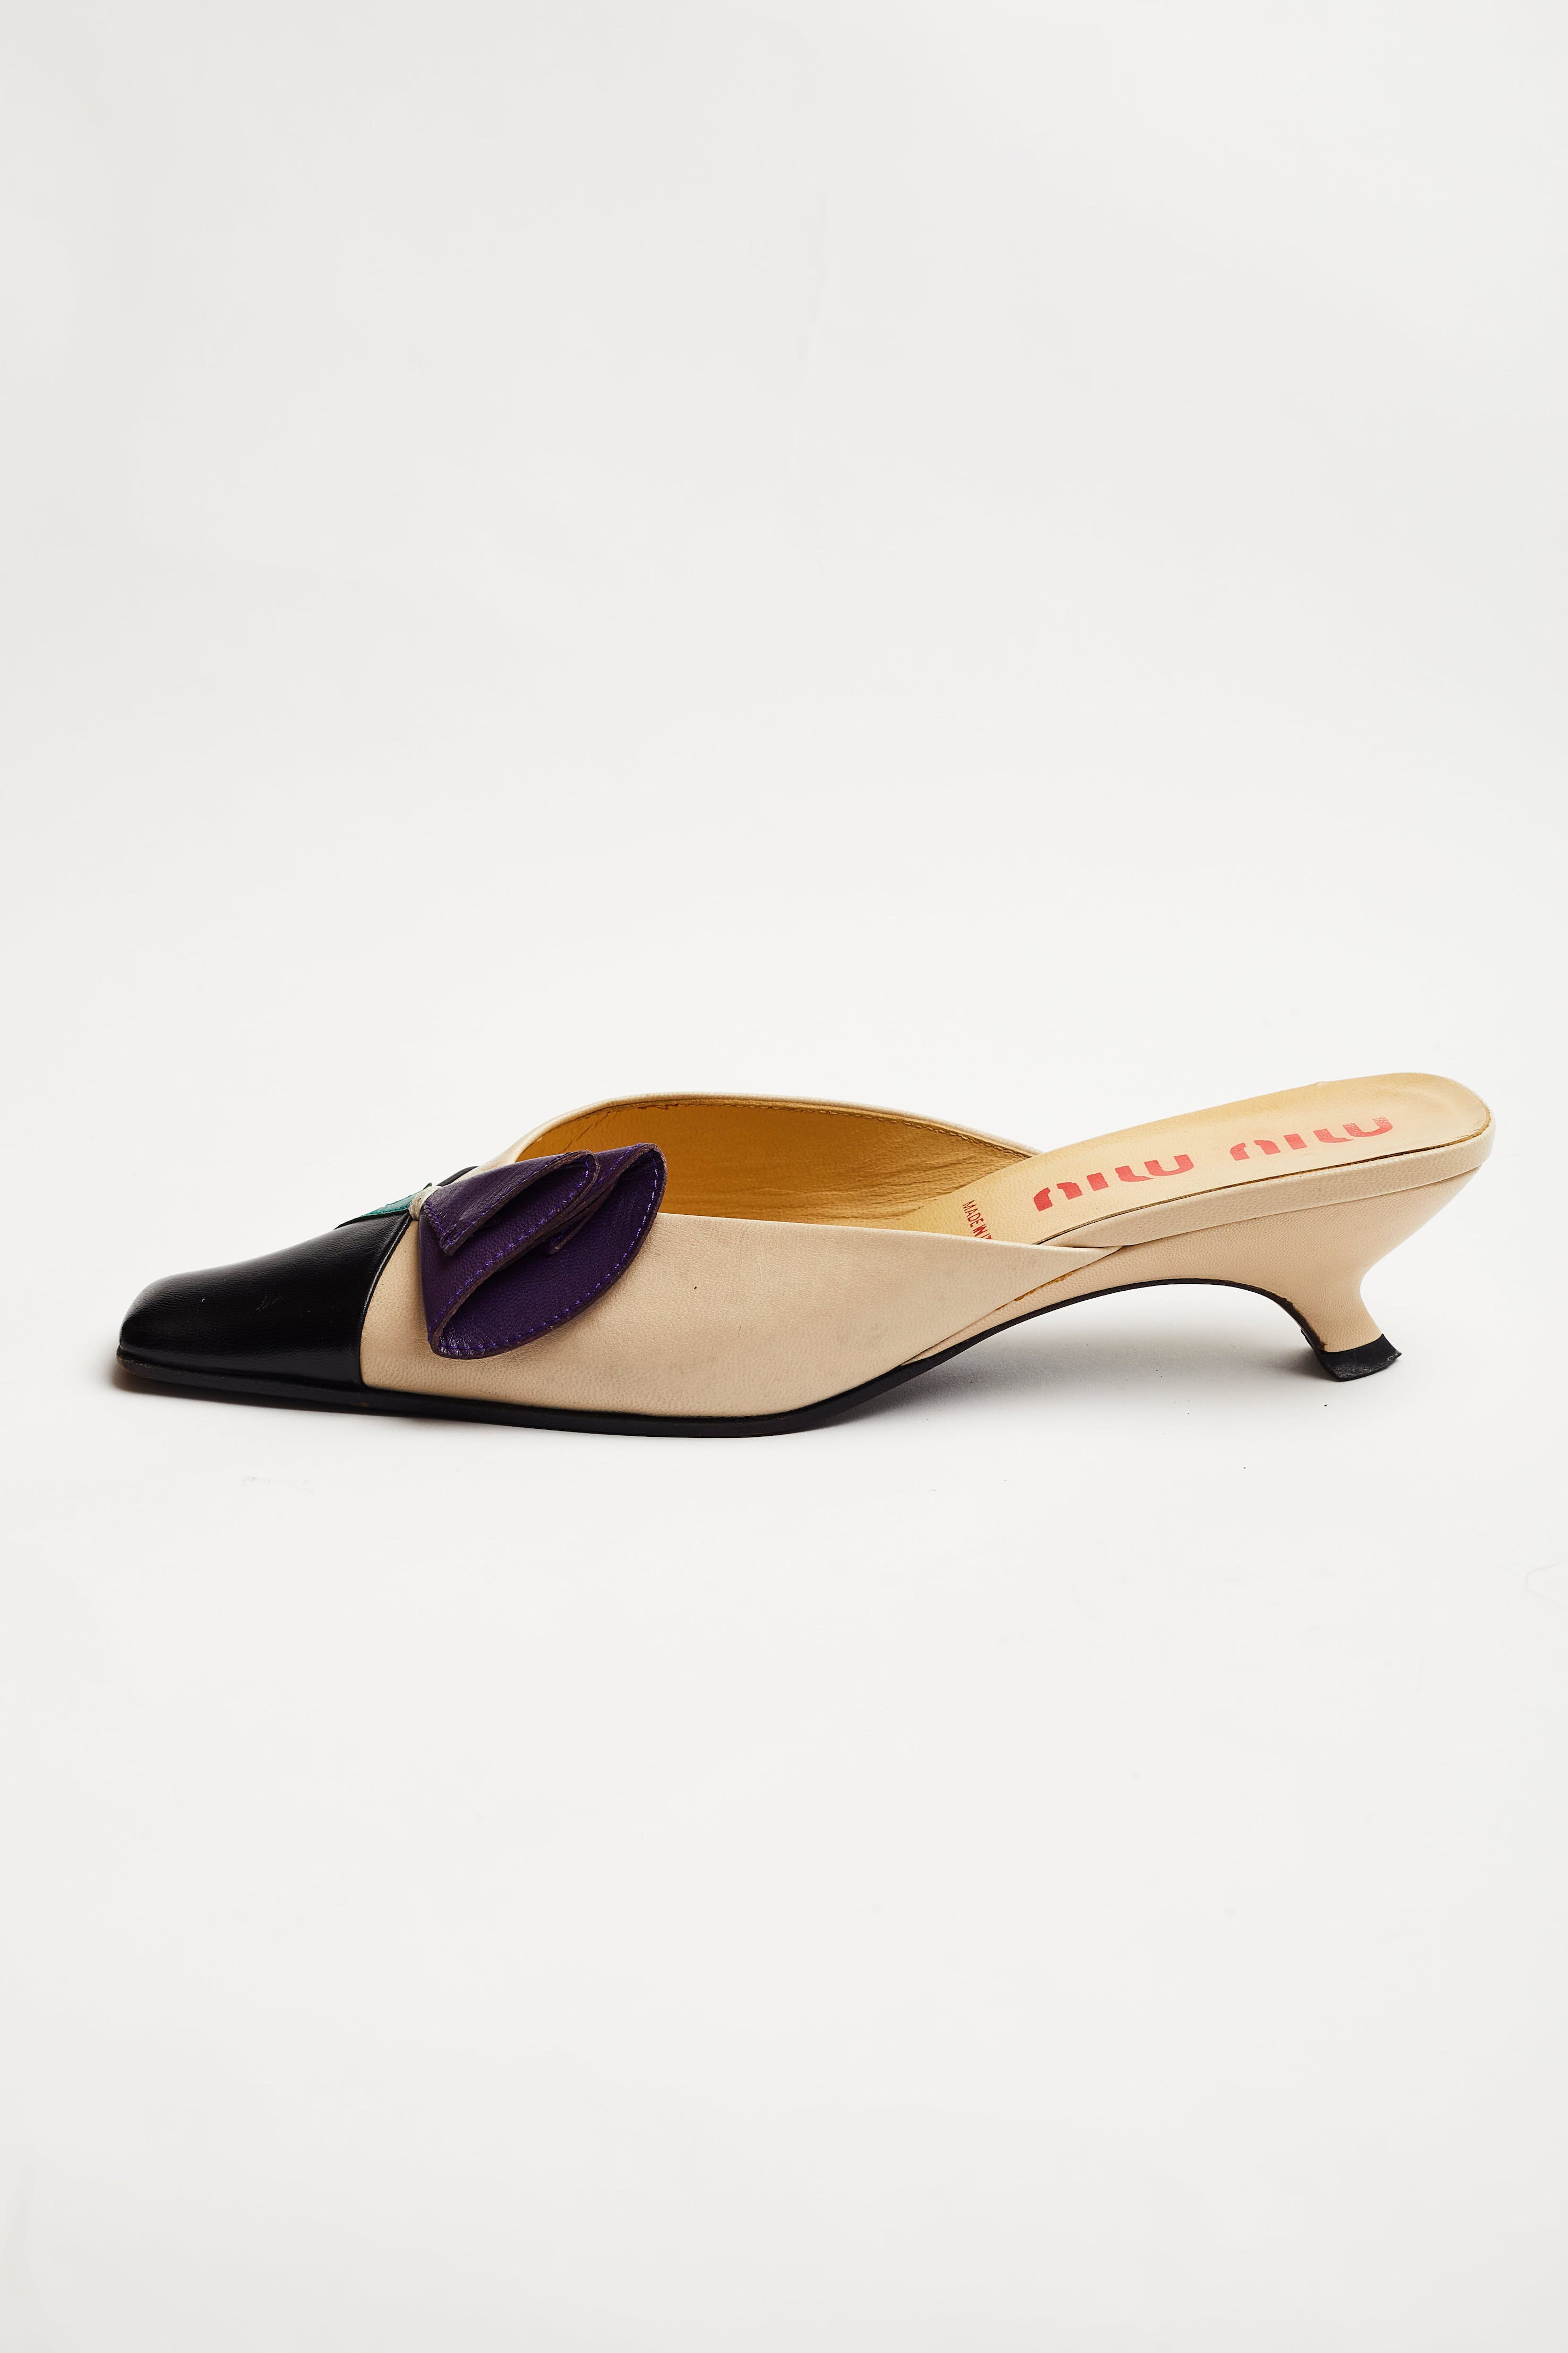 Miu Miu <br> 90's elongated toe flower kitten heels